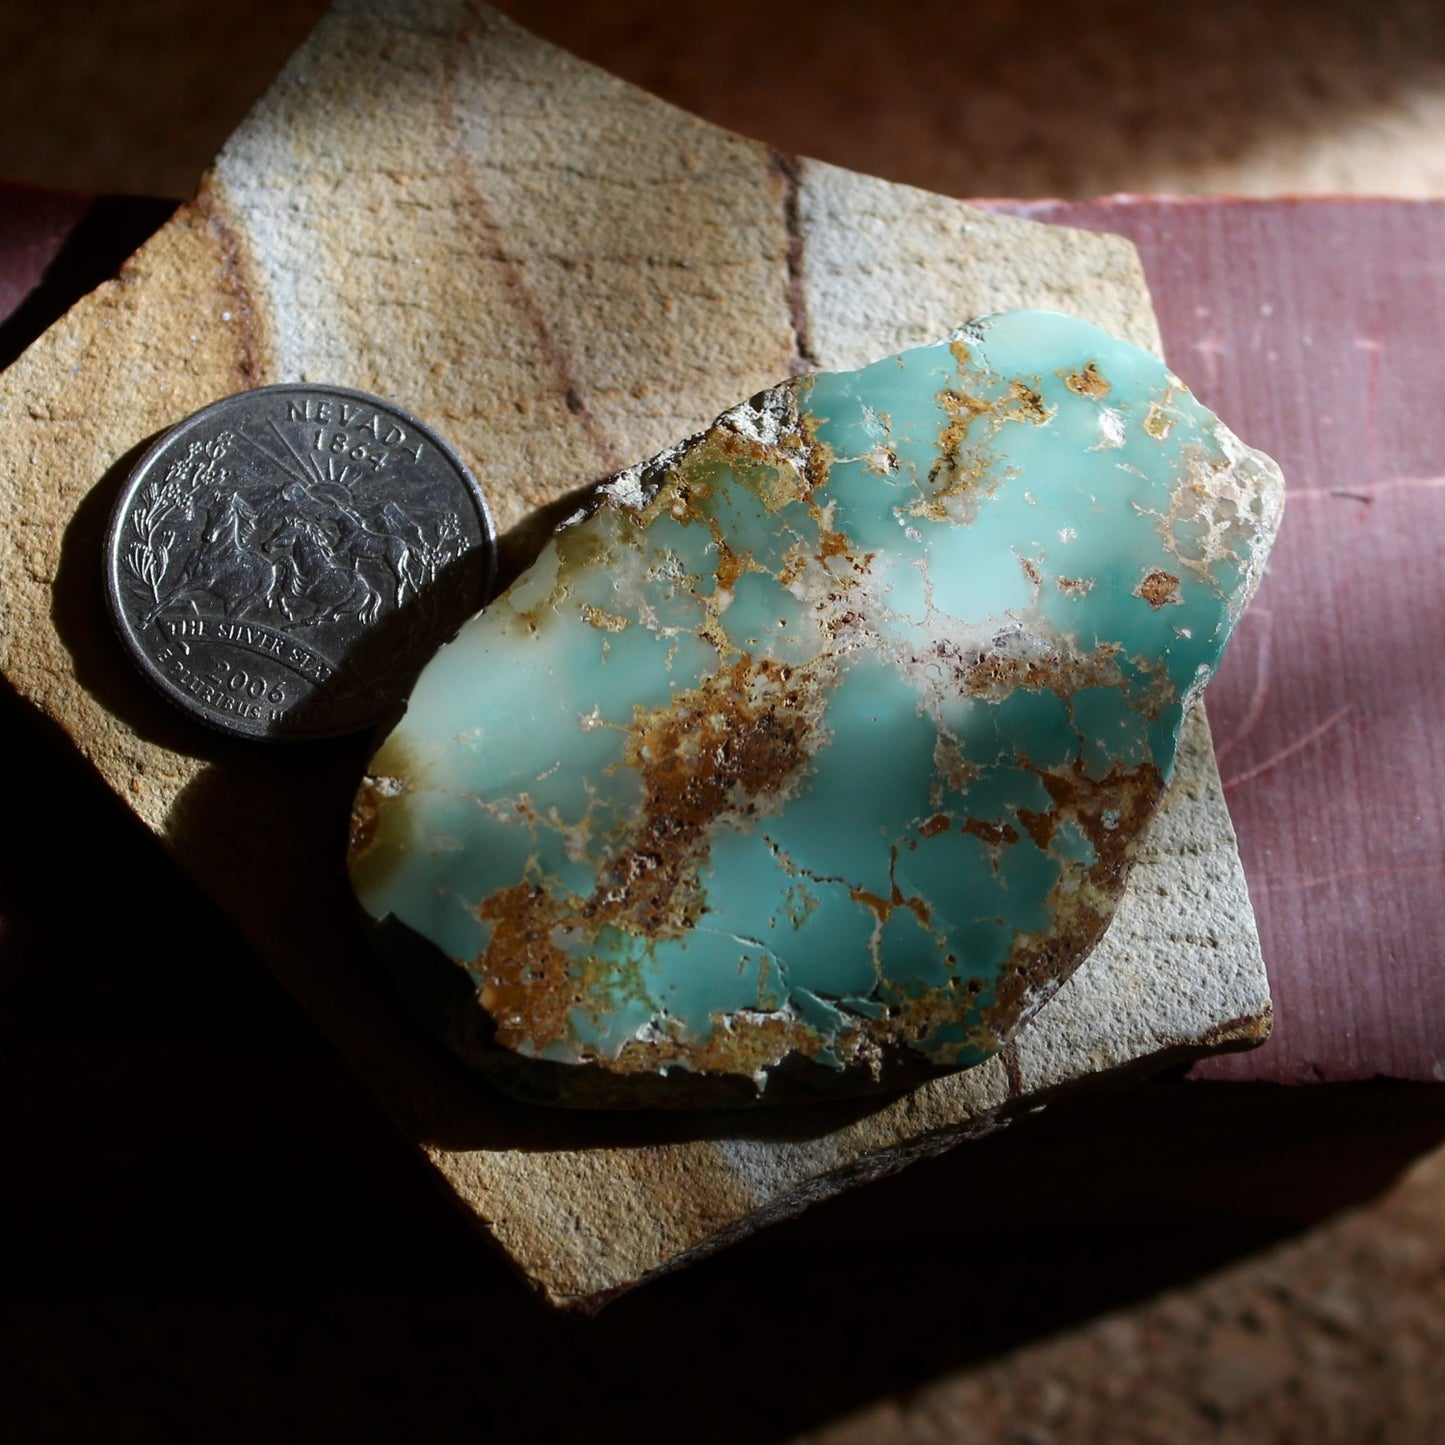 150 carat green Stone Mountain Turquoise polished vein specimen